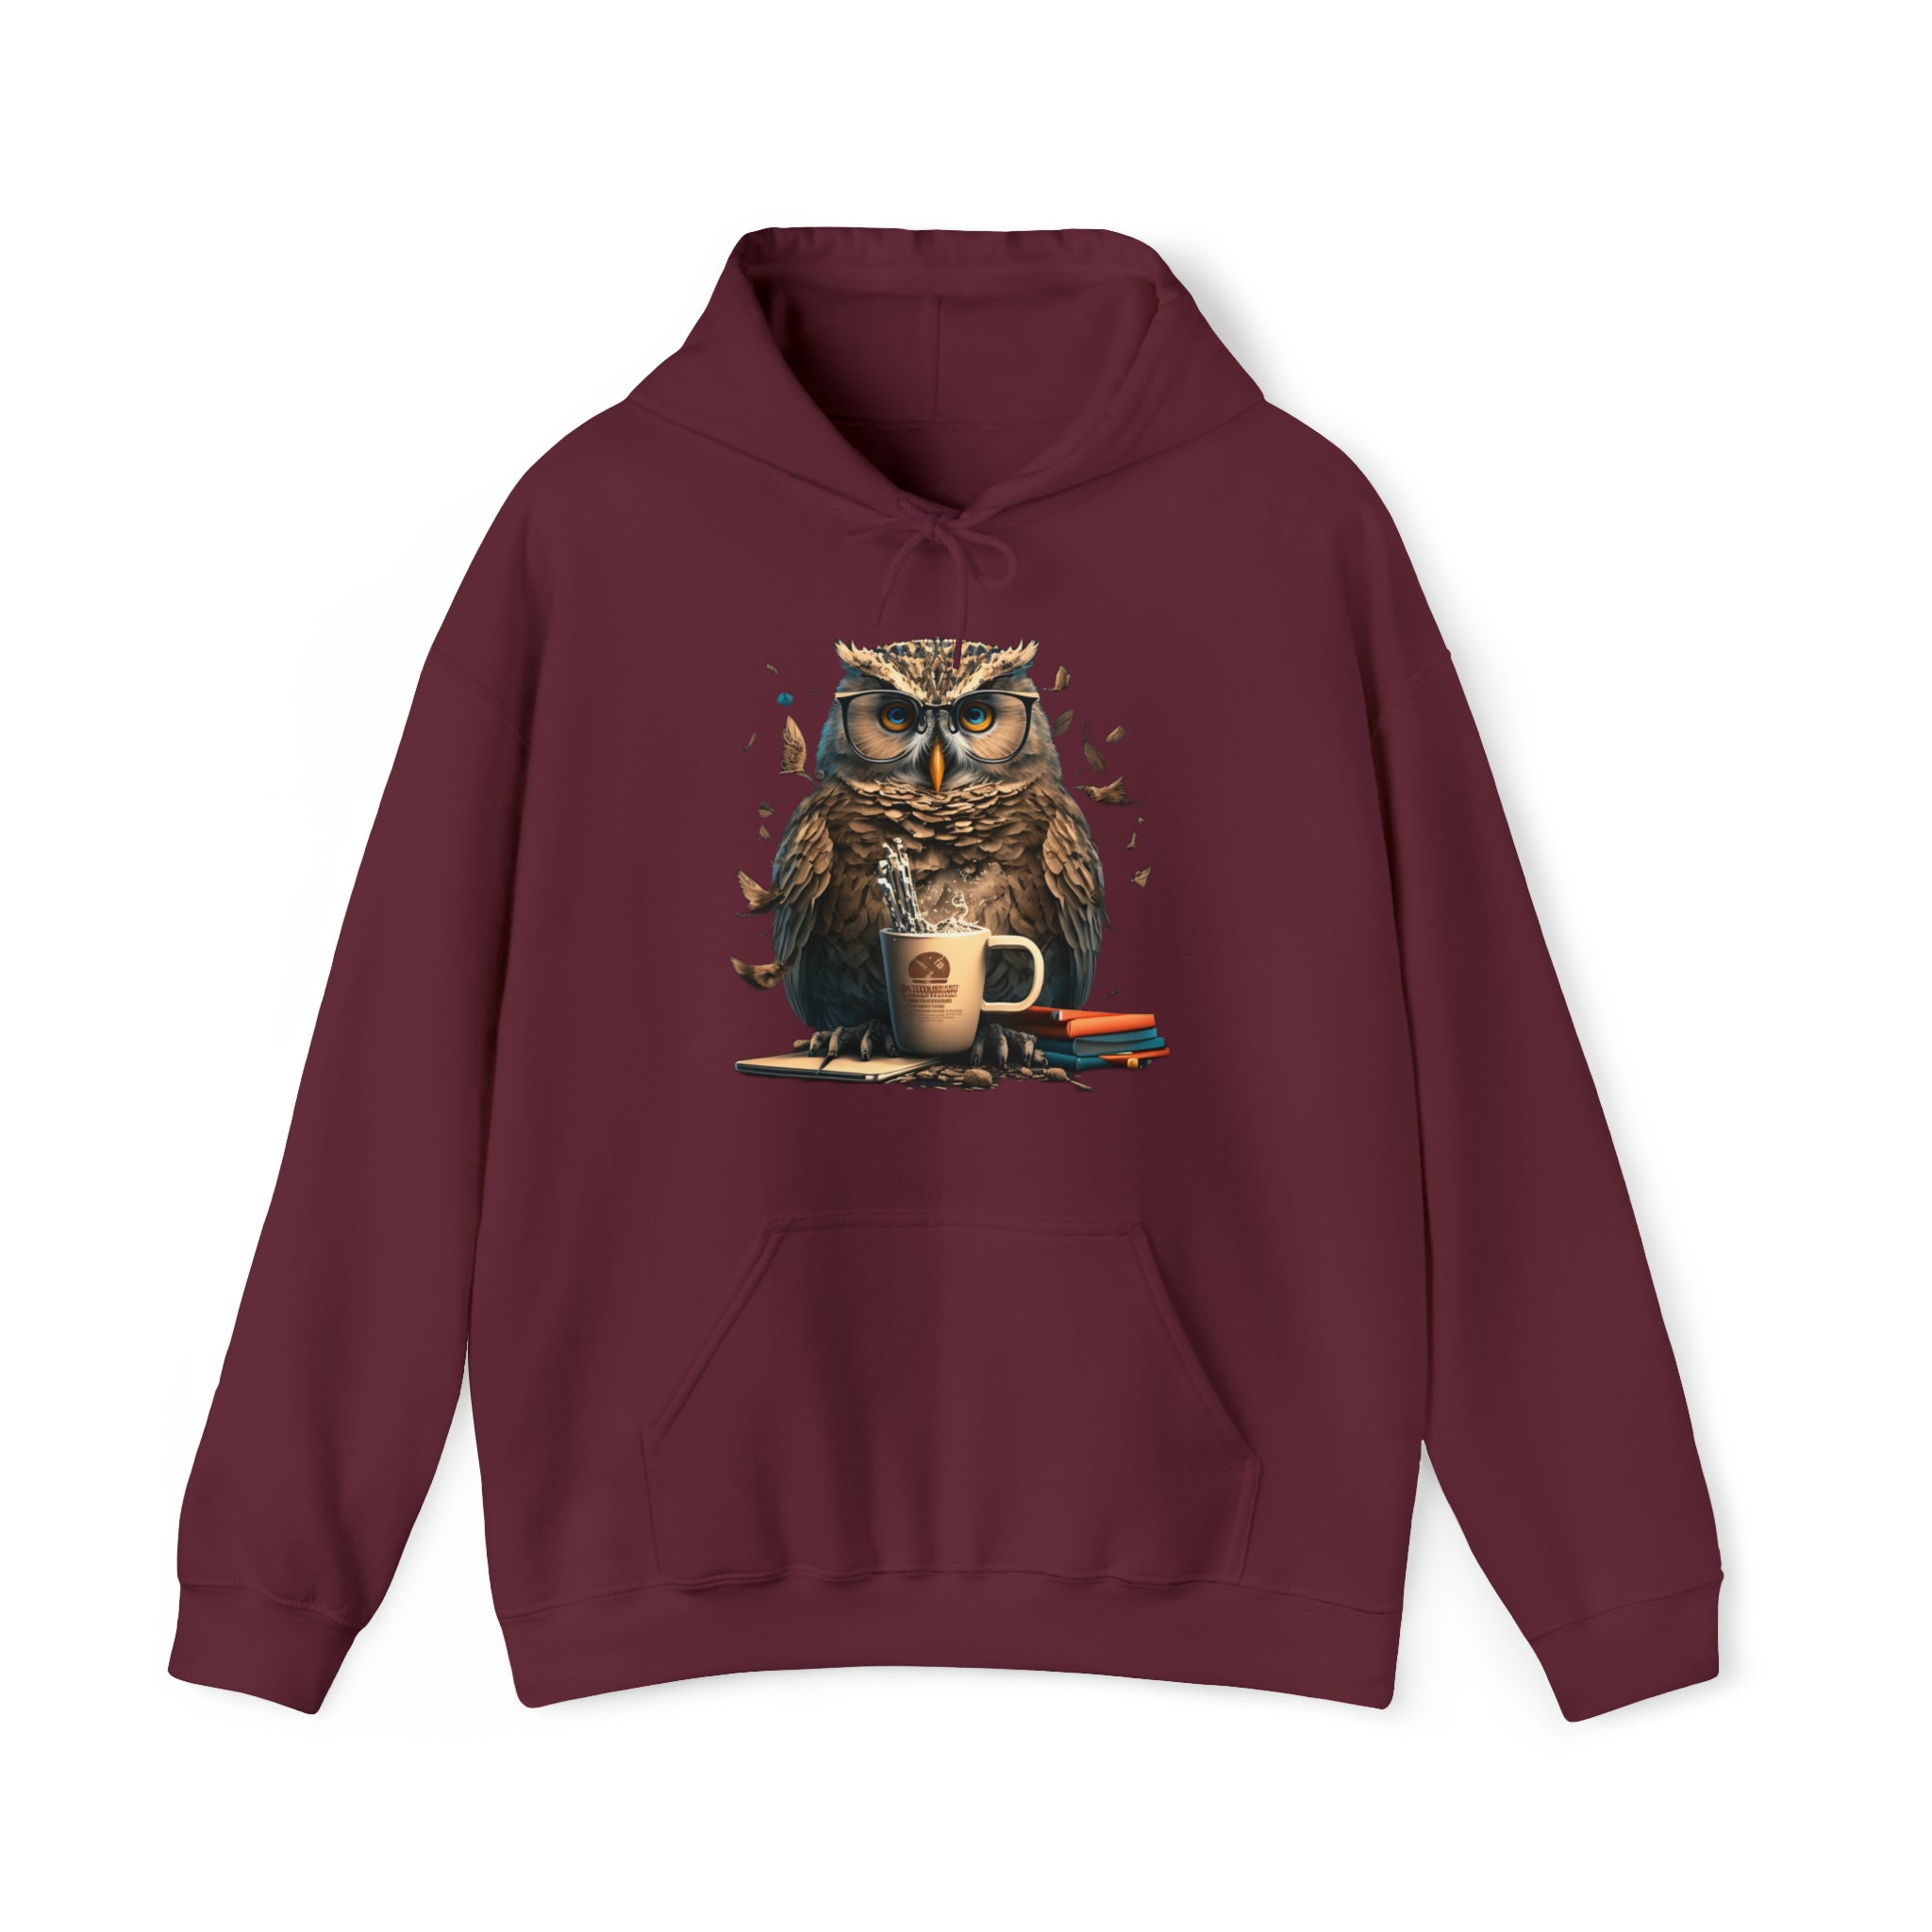 Programming with an Owl's-eye View Unisex Heavy Blend Hooded Sweatshirt